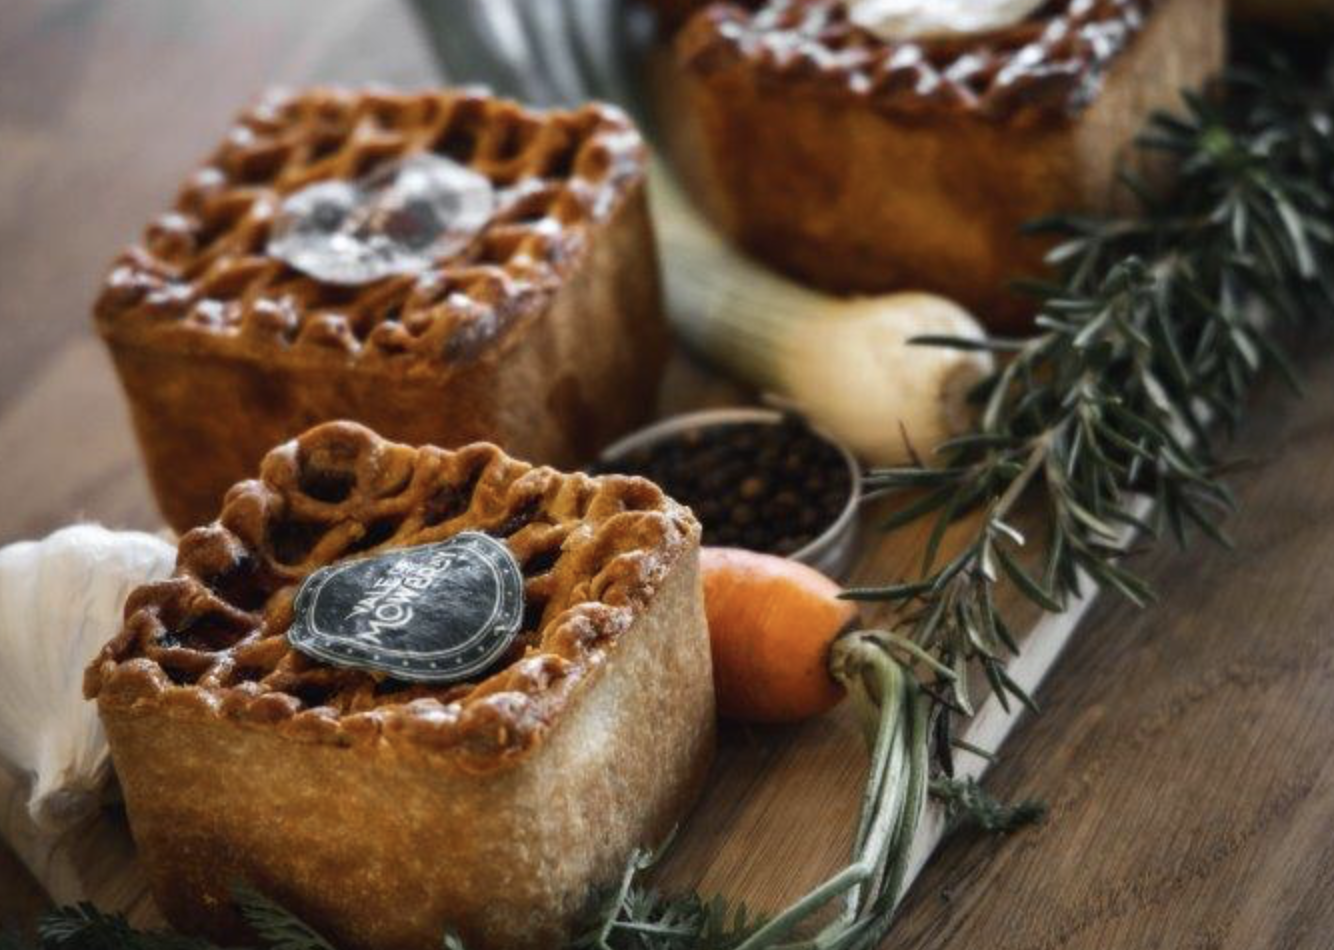 Yorkshire pie-maker launches ‘posh pies’